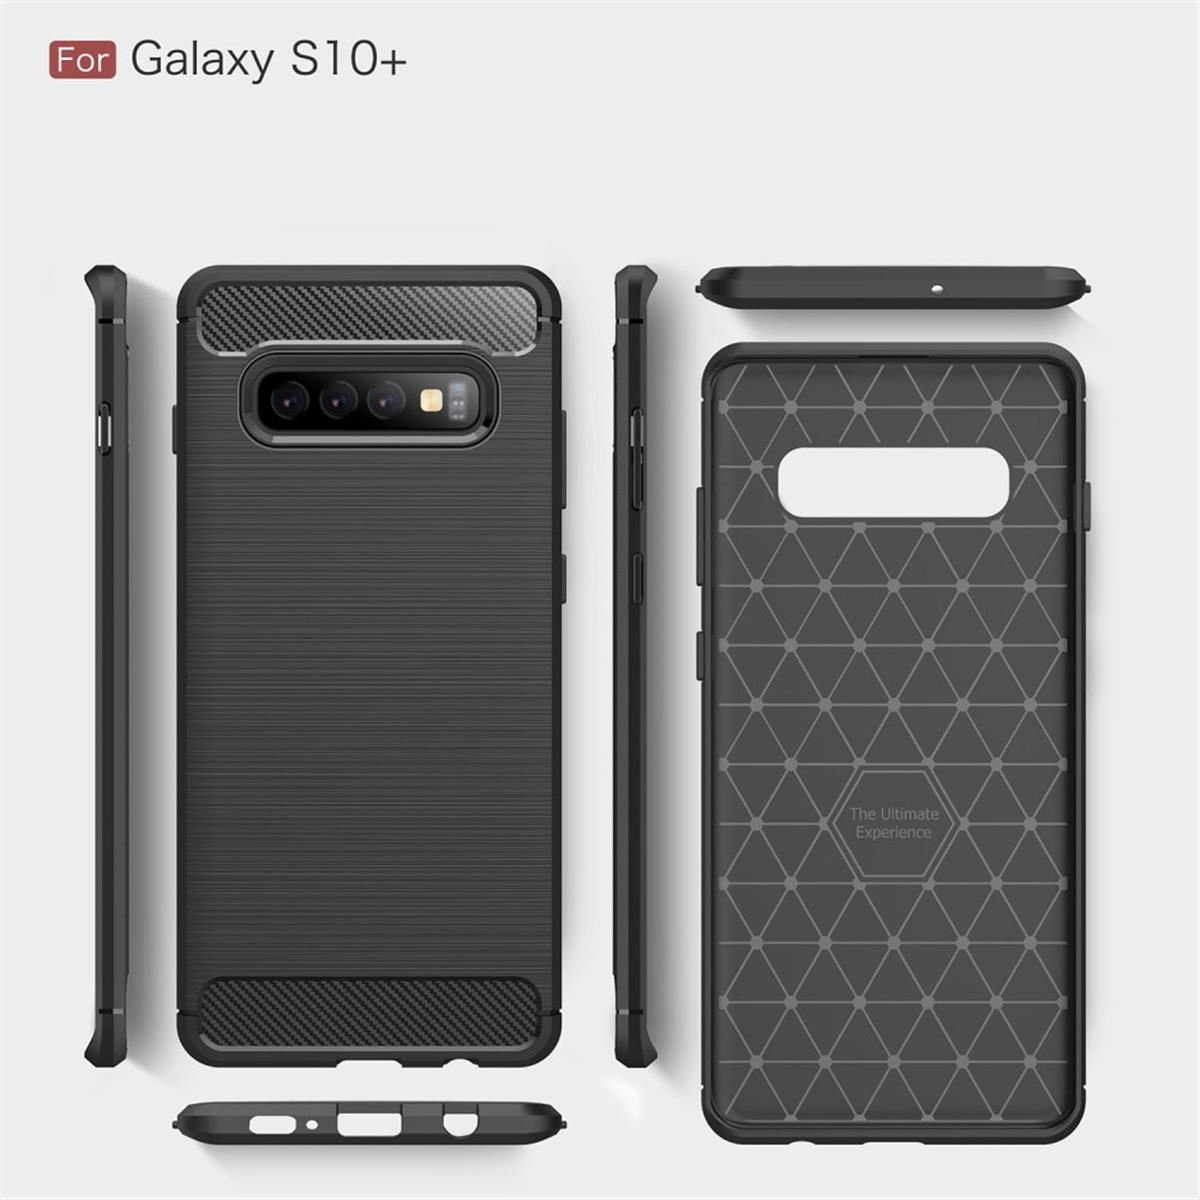 COVERKINGZ Handycase im Galaxy Look, S10+ Samsung, Carbon schwarz Backcover, [Plus